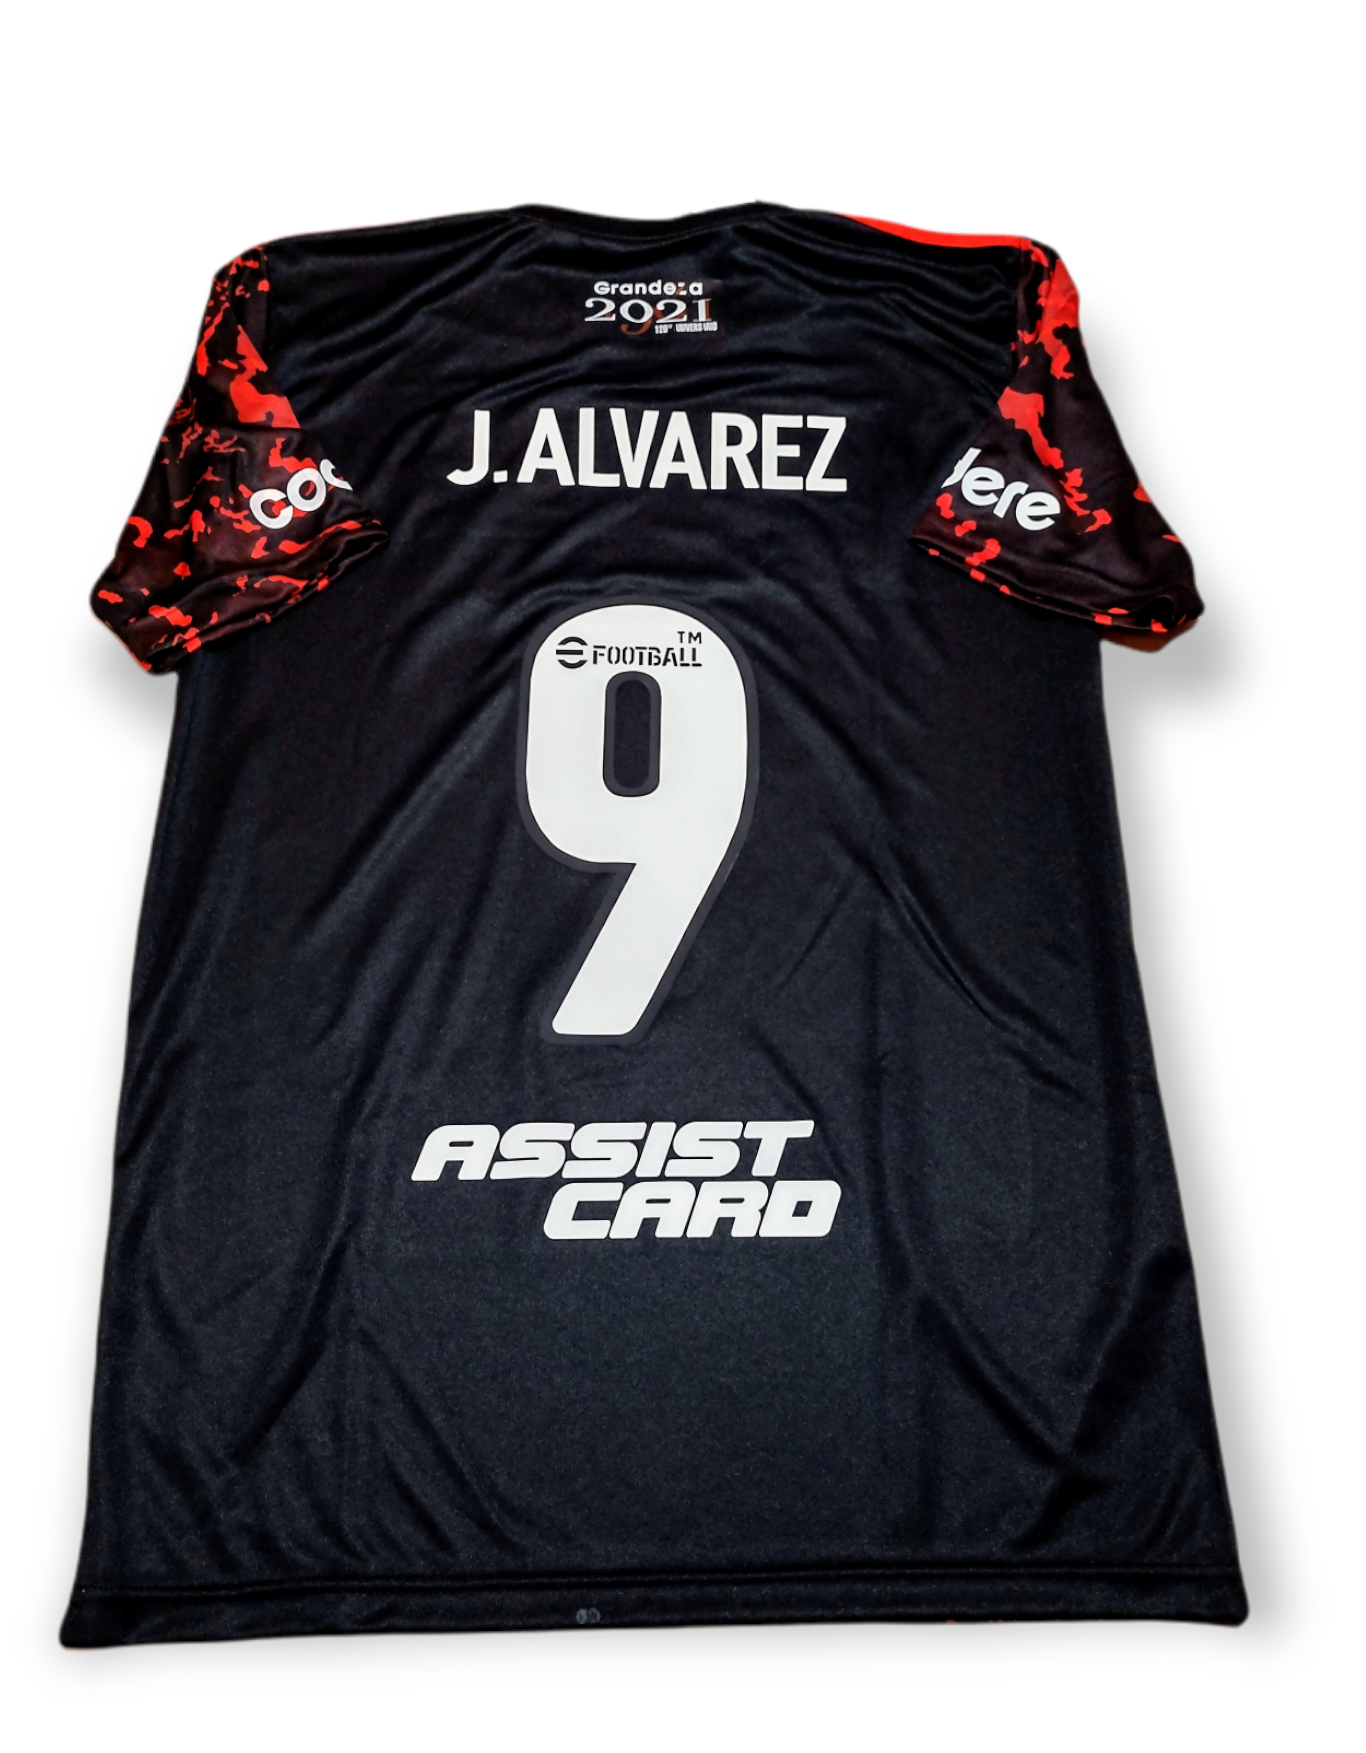 Camiseta De River Adidas Alternativa Julian Alvarez Negra Solo Deportes